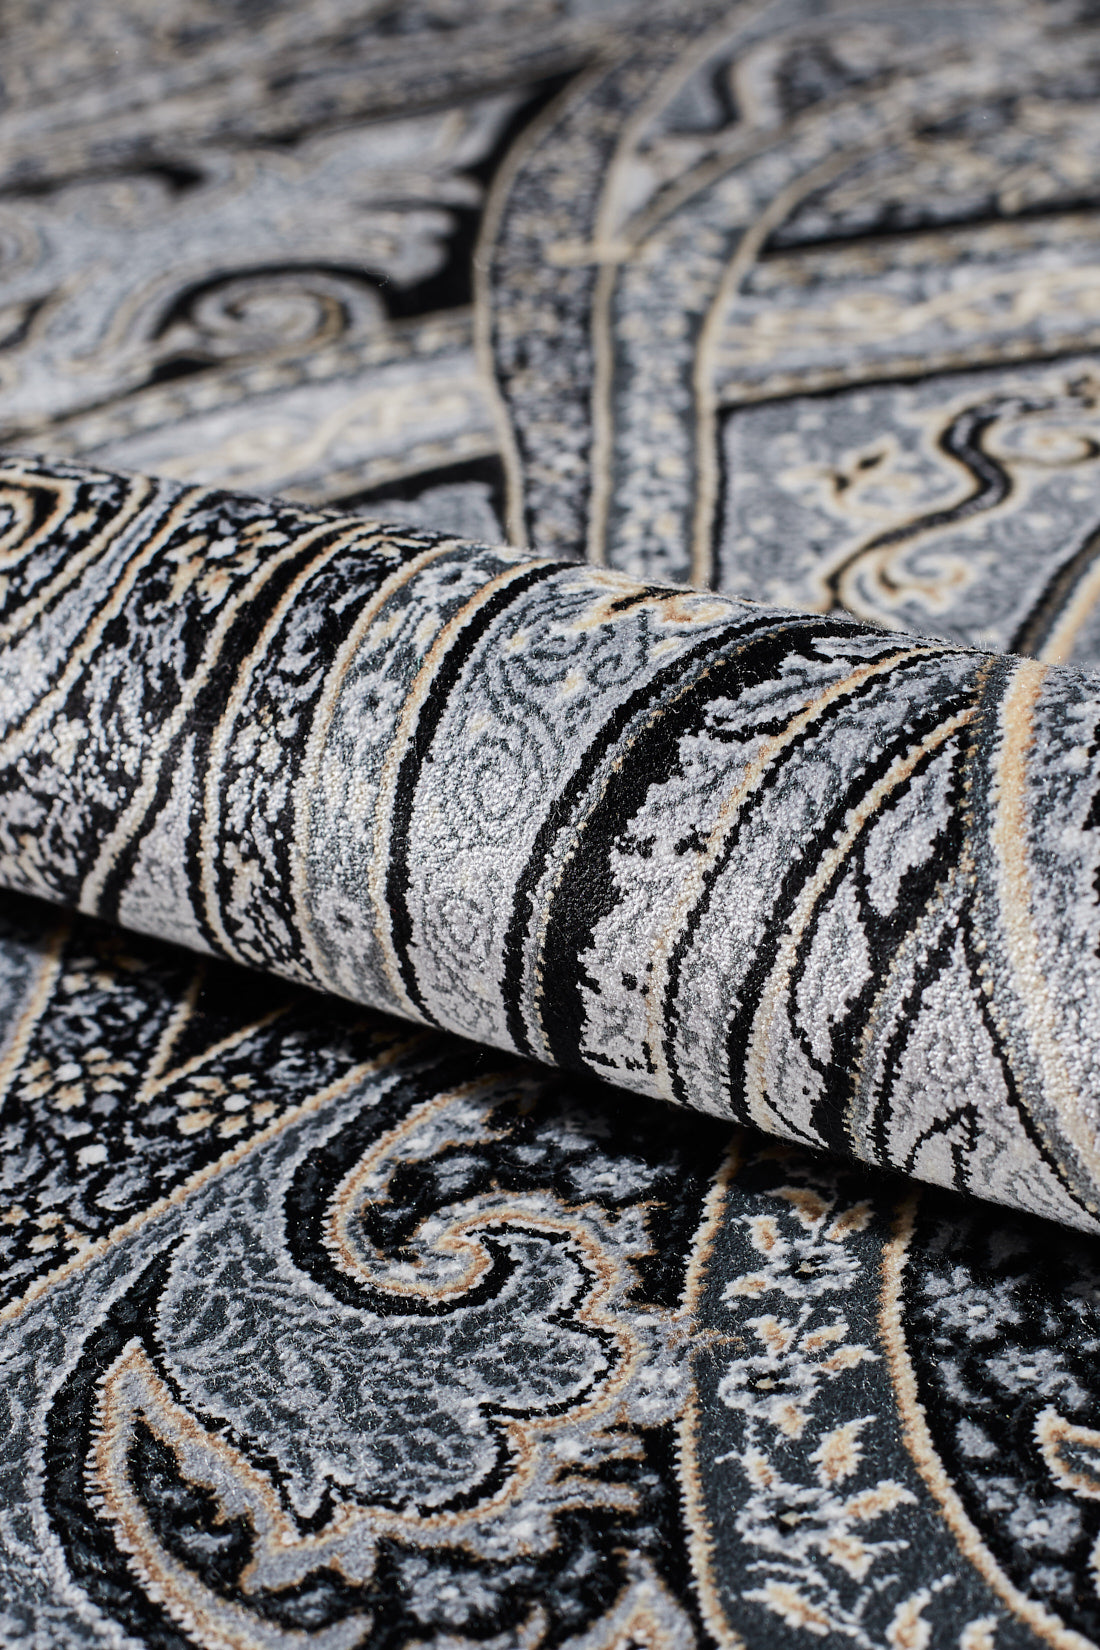 Ottoman Heritage Seidenteppich – Obsidian – 1170D 